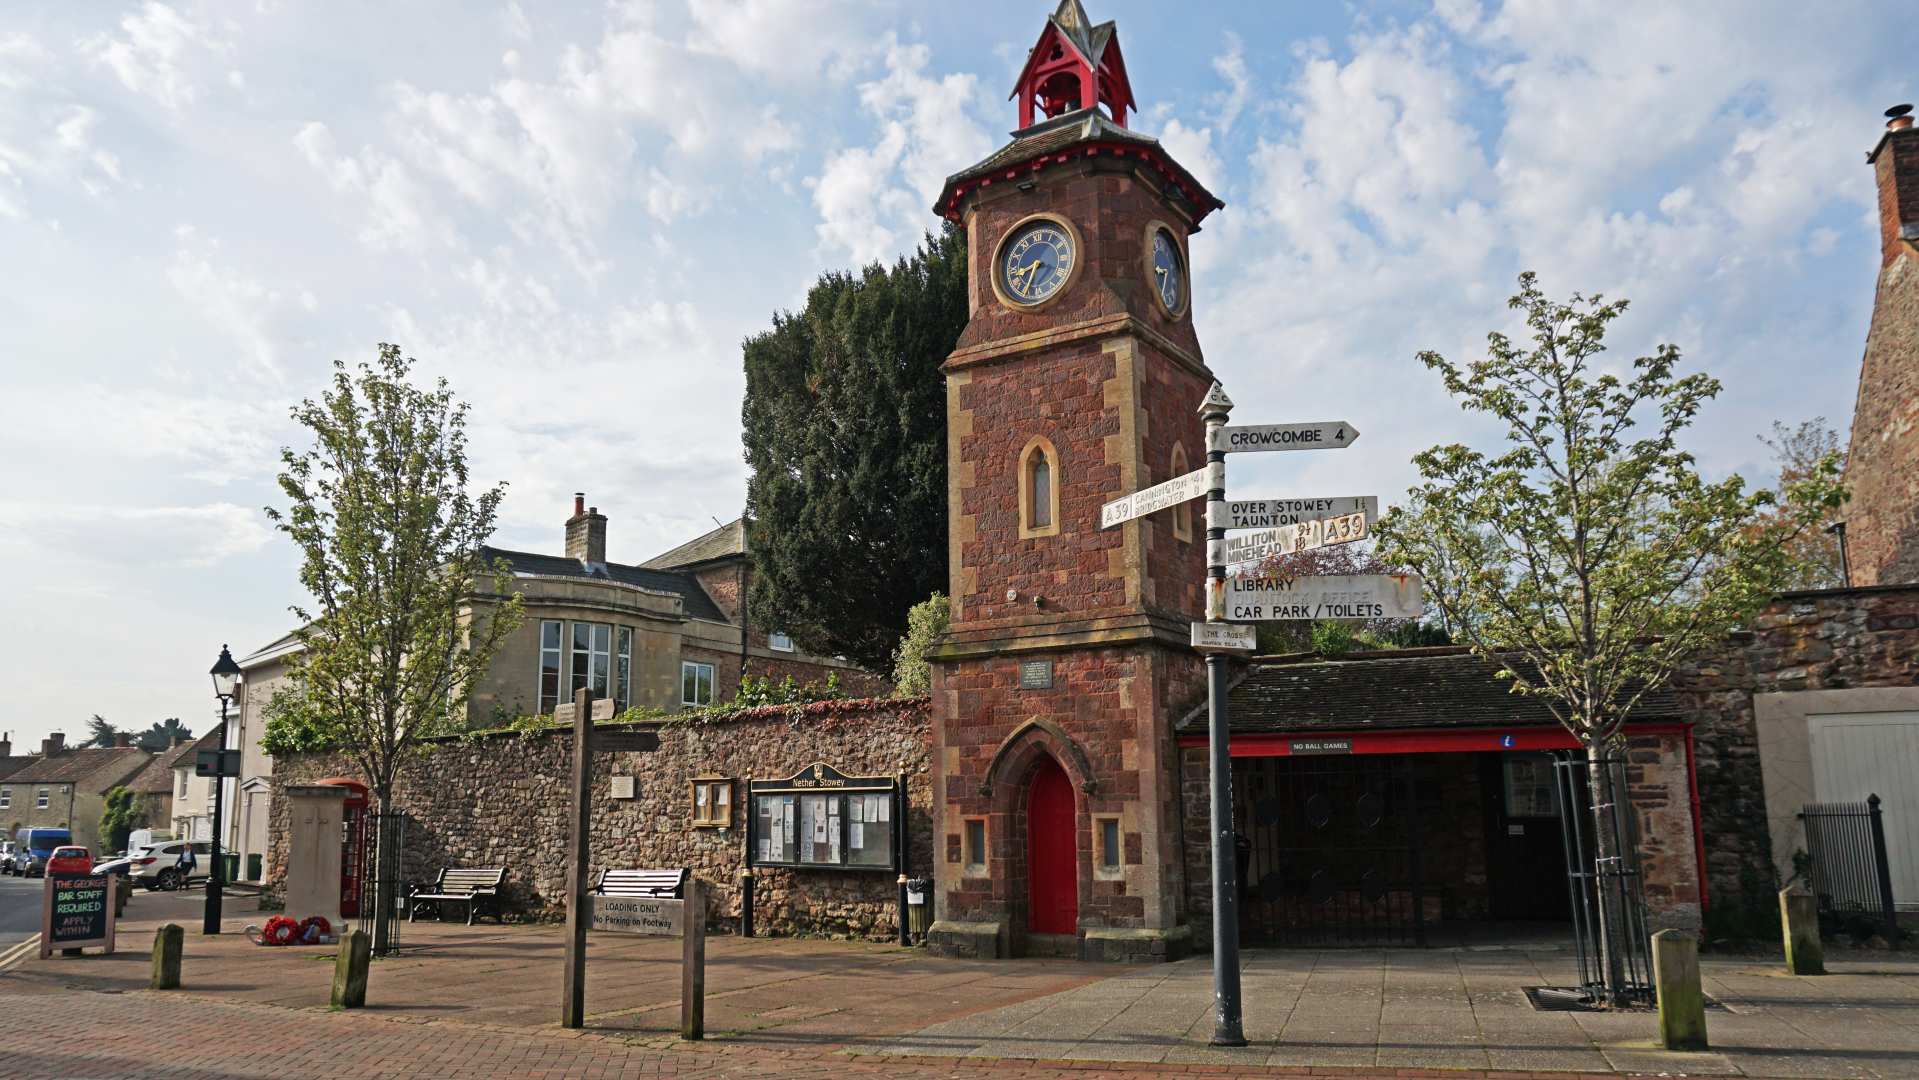 Nether Stowey Clock Tower - Nether Stowey Clock Tower